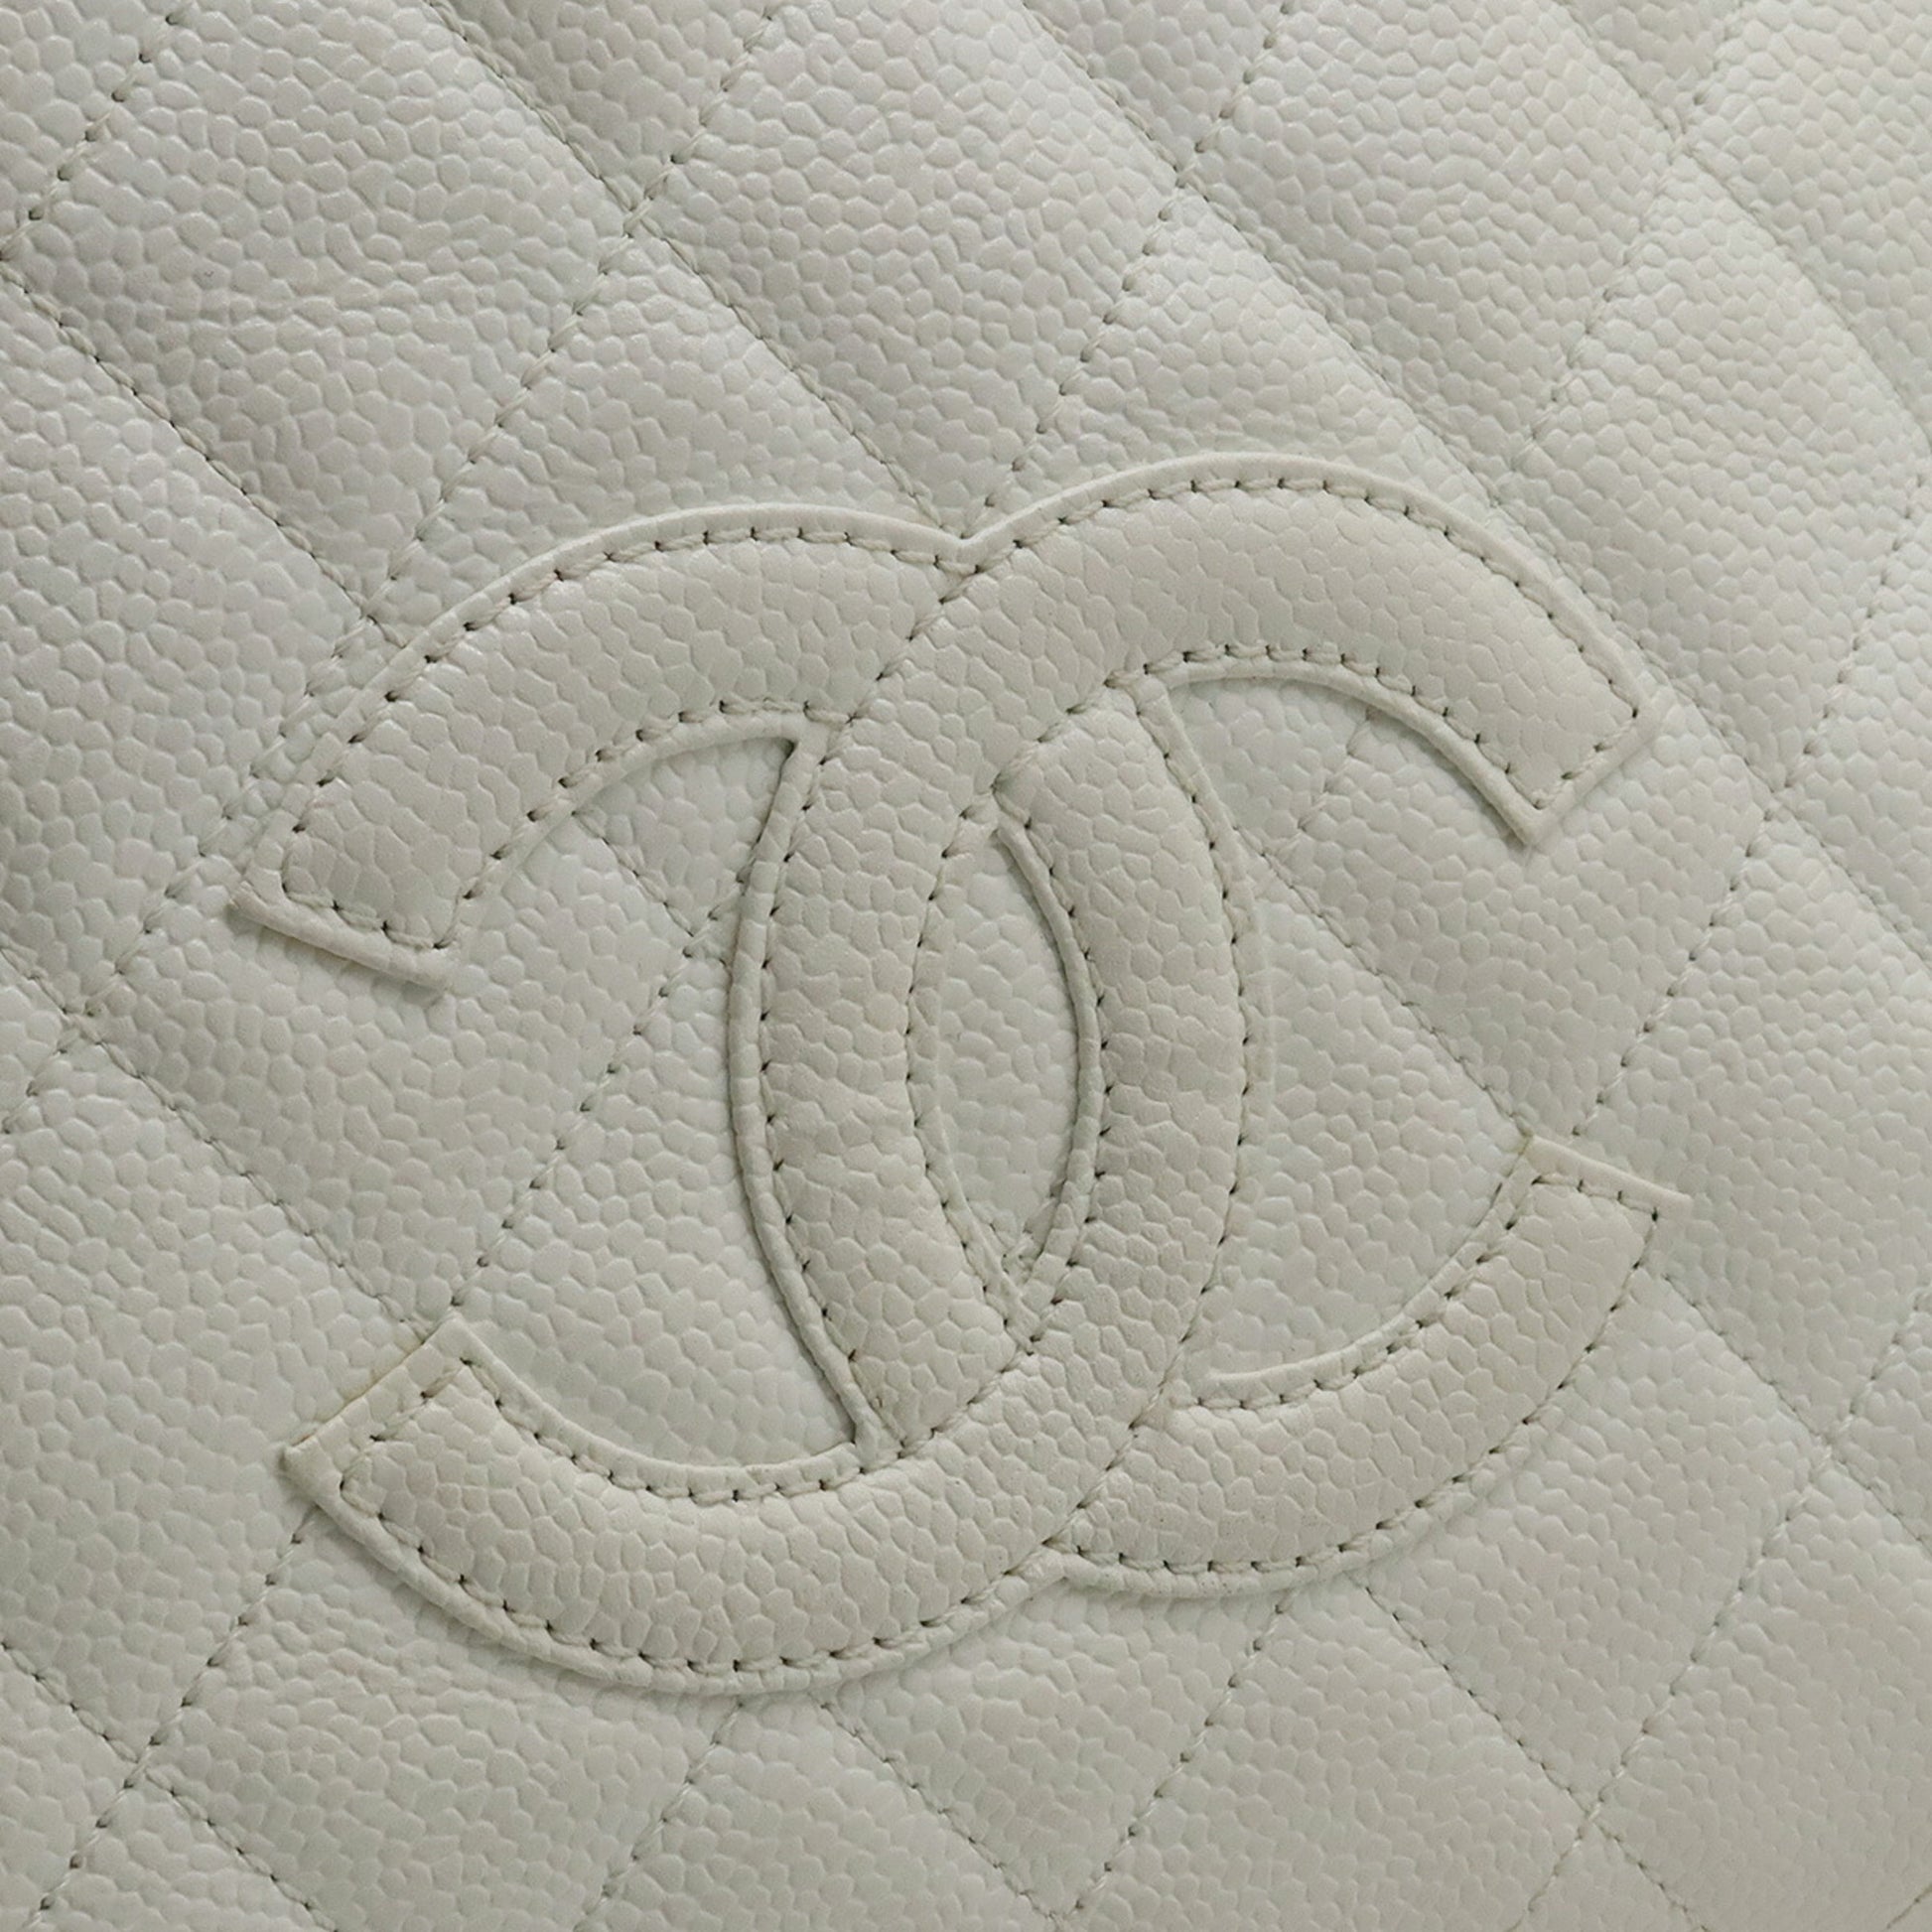 CHANEL matelasse chain tote bag shoulder caviar skin leather white